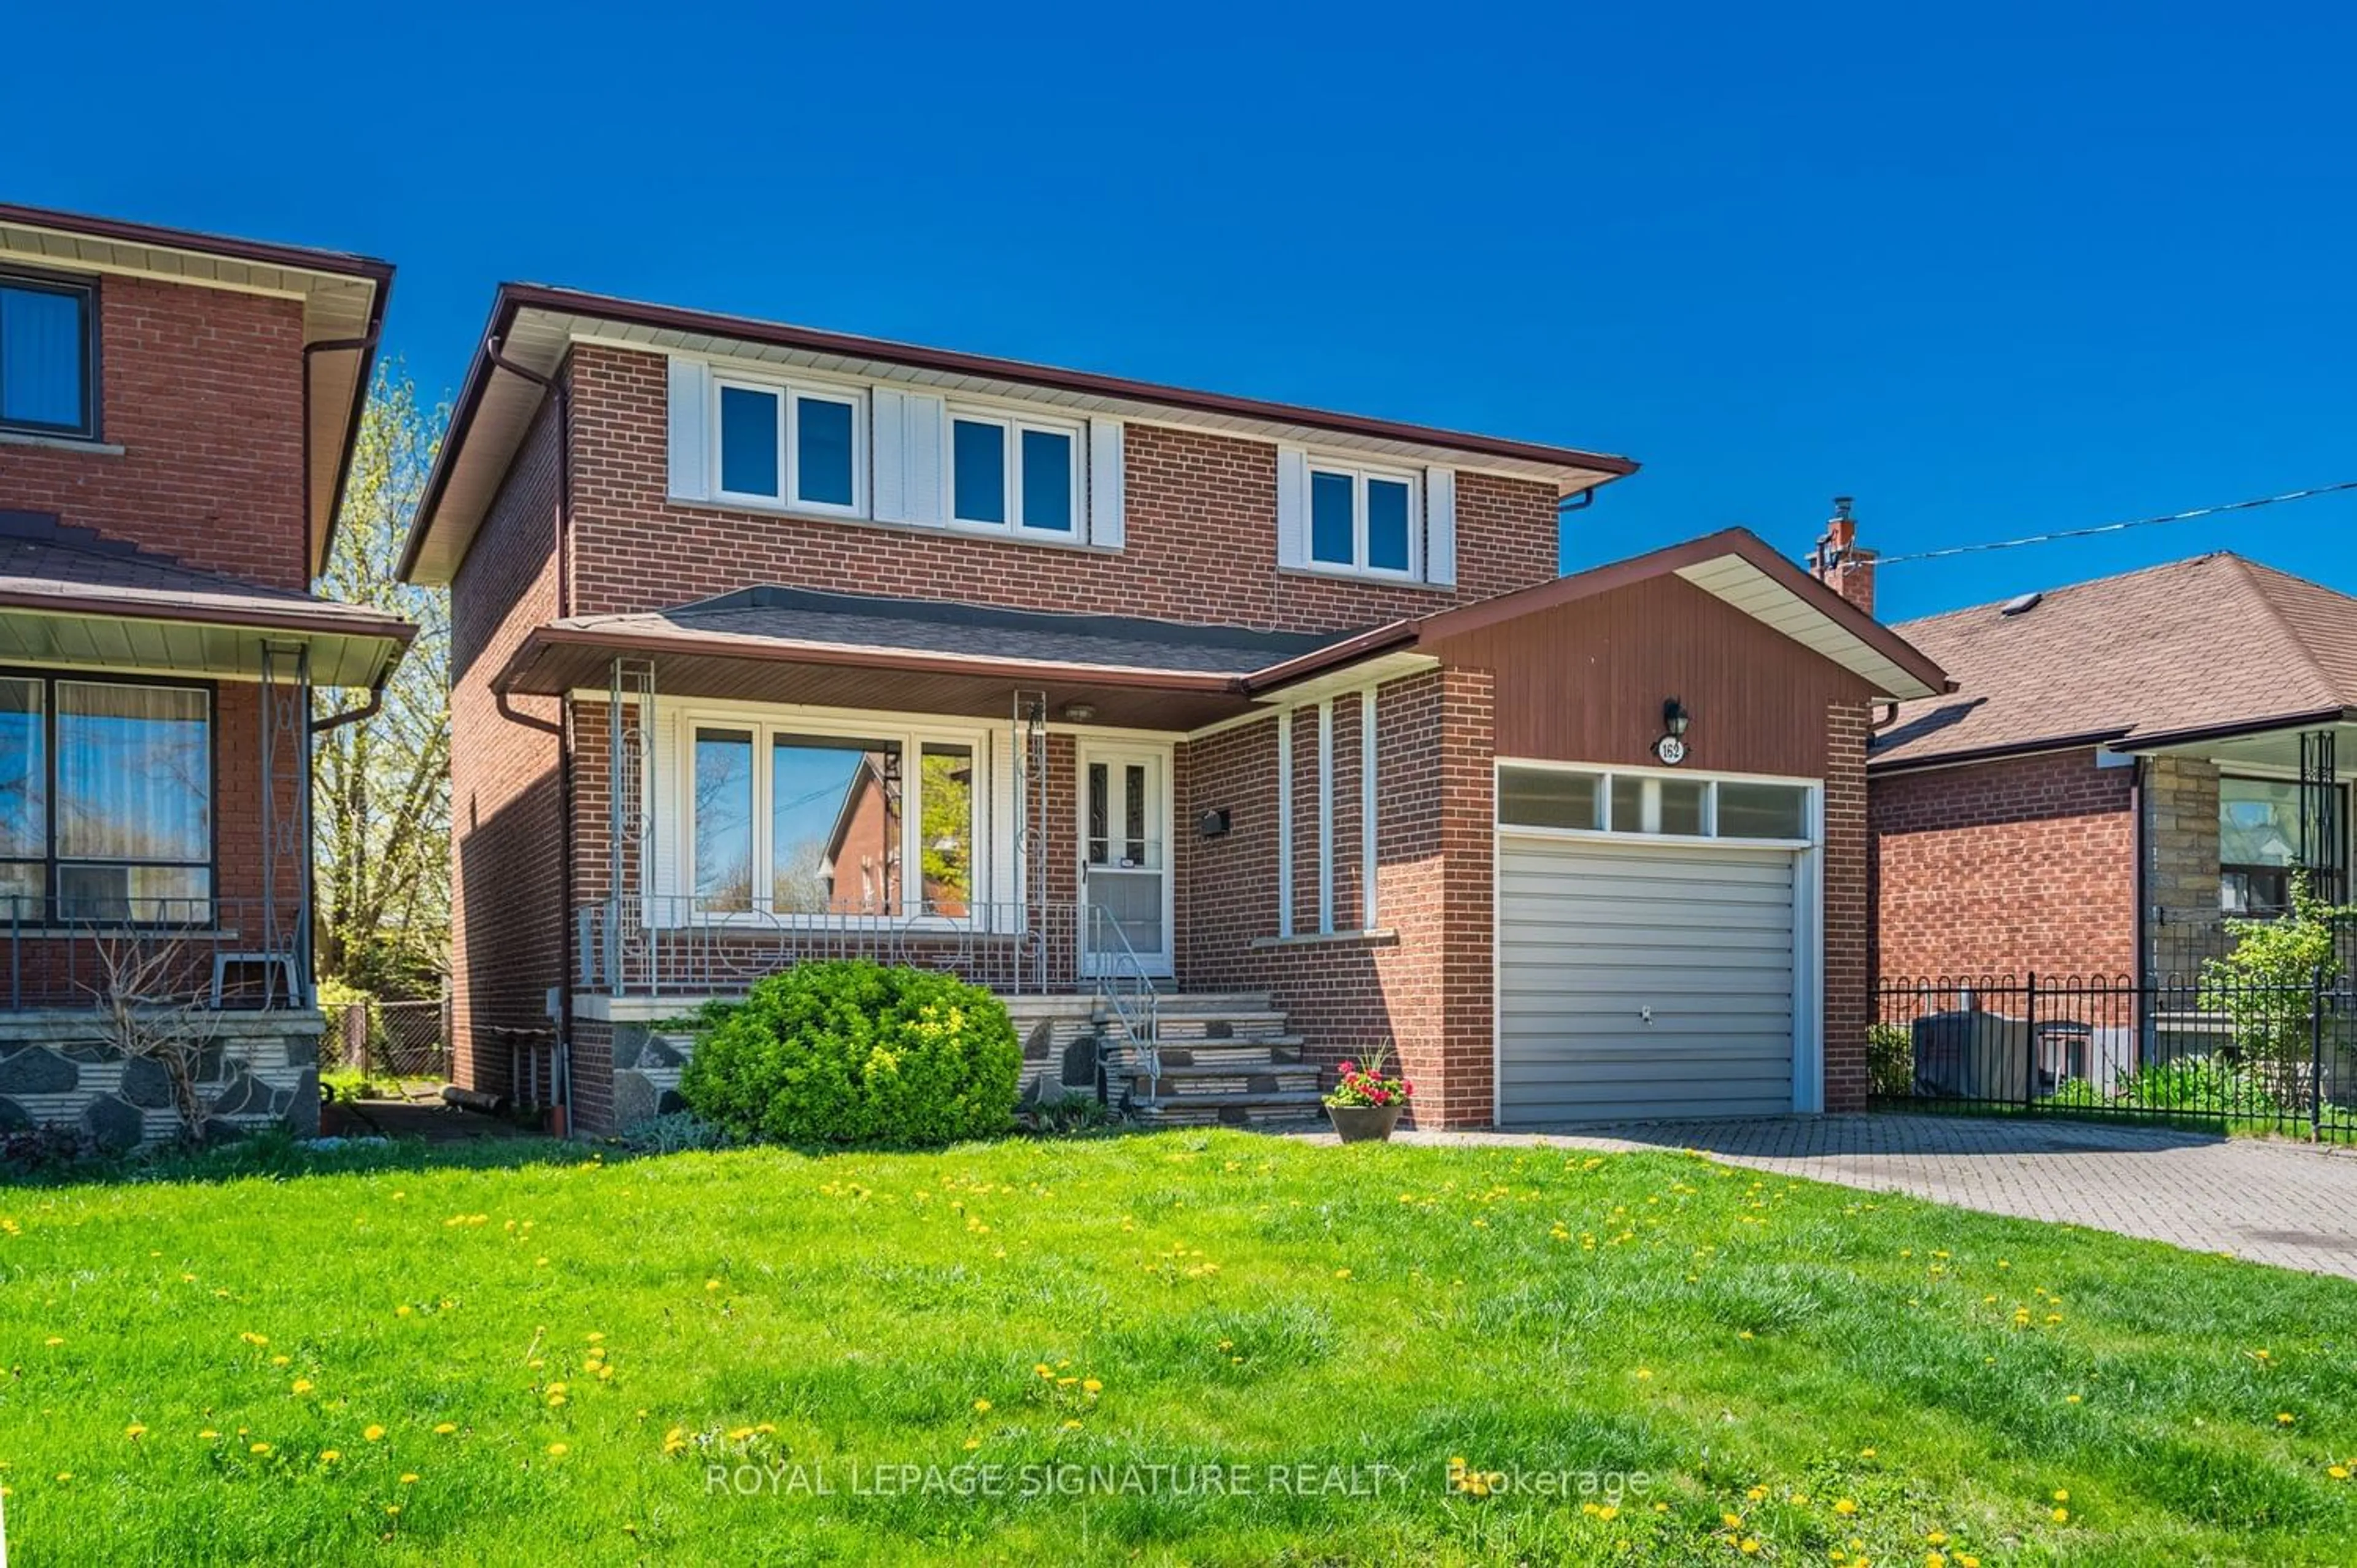 Home with brick exterior material for 162 Delta St, Toronto Ontario M8W 4E5